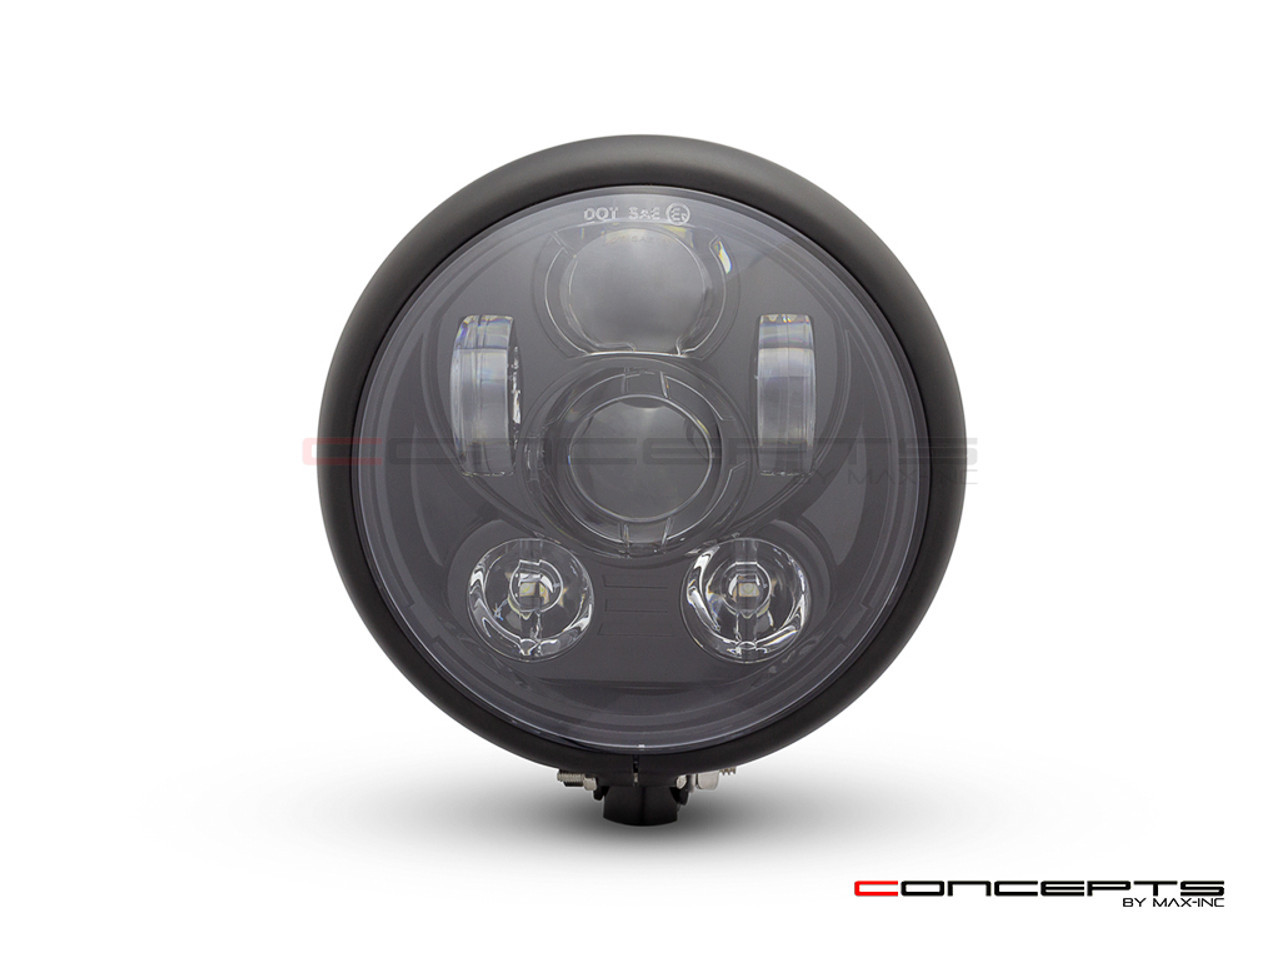 5.75 Black Six Projector LED Headlight Motorcycle Popular among